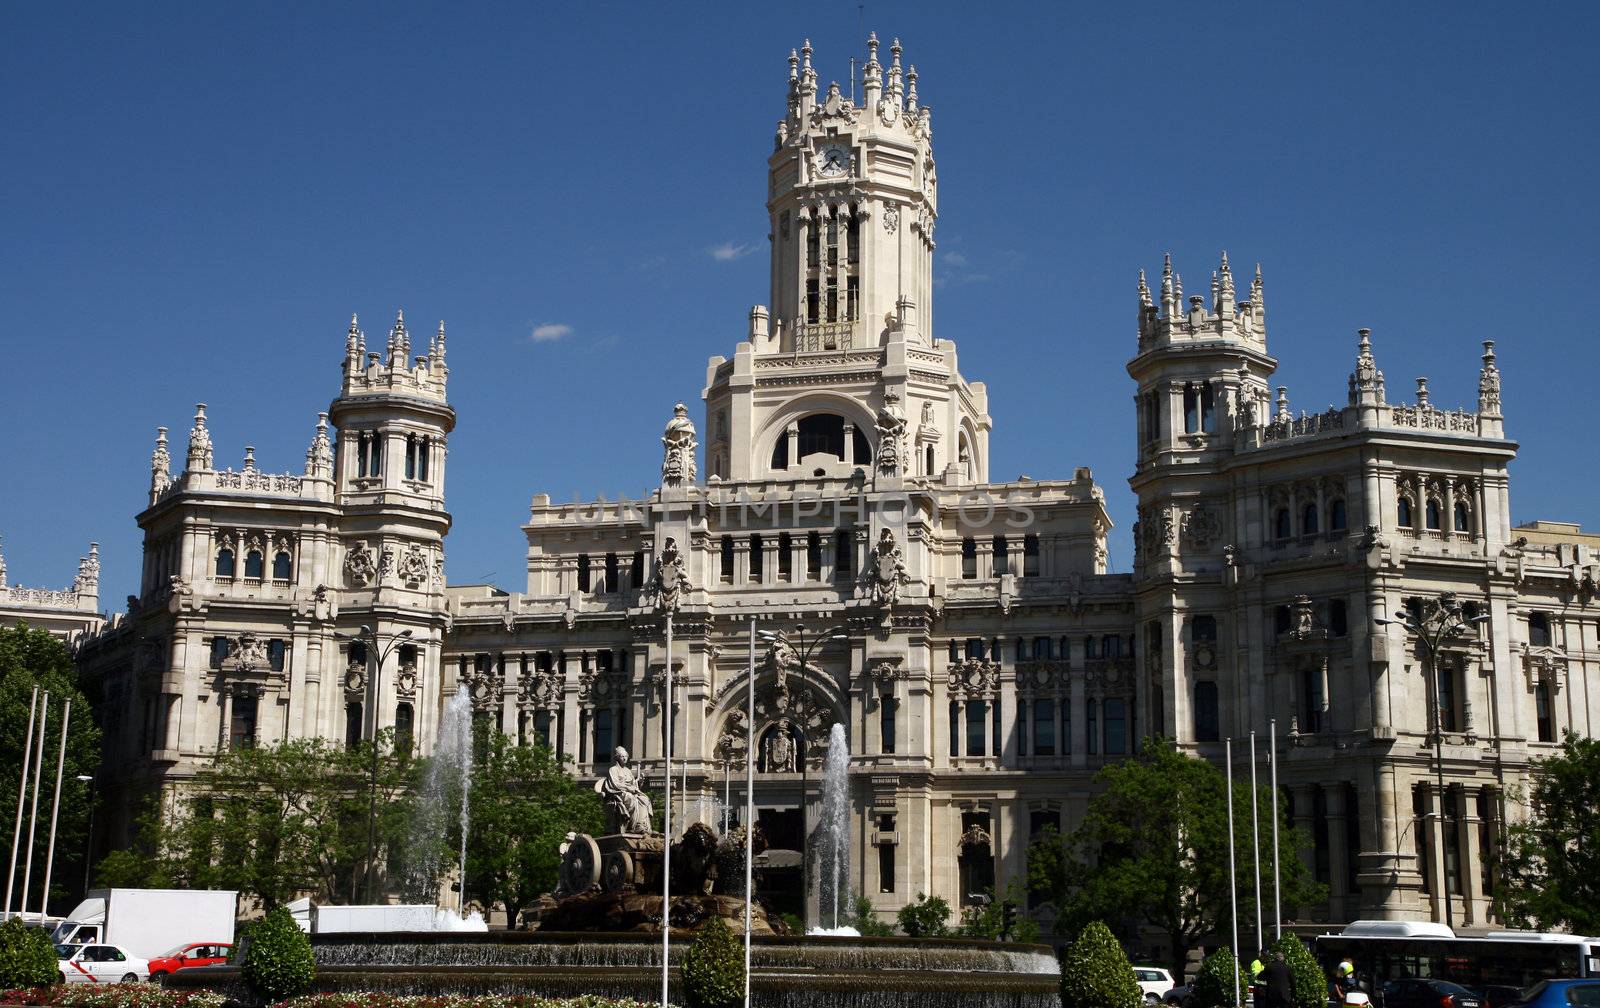 Palacio de Communicaciones, Madrid, Spain by mrfocus